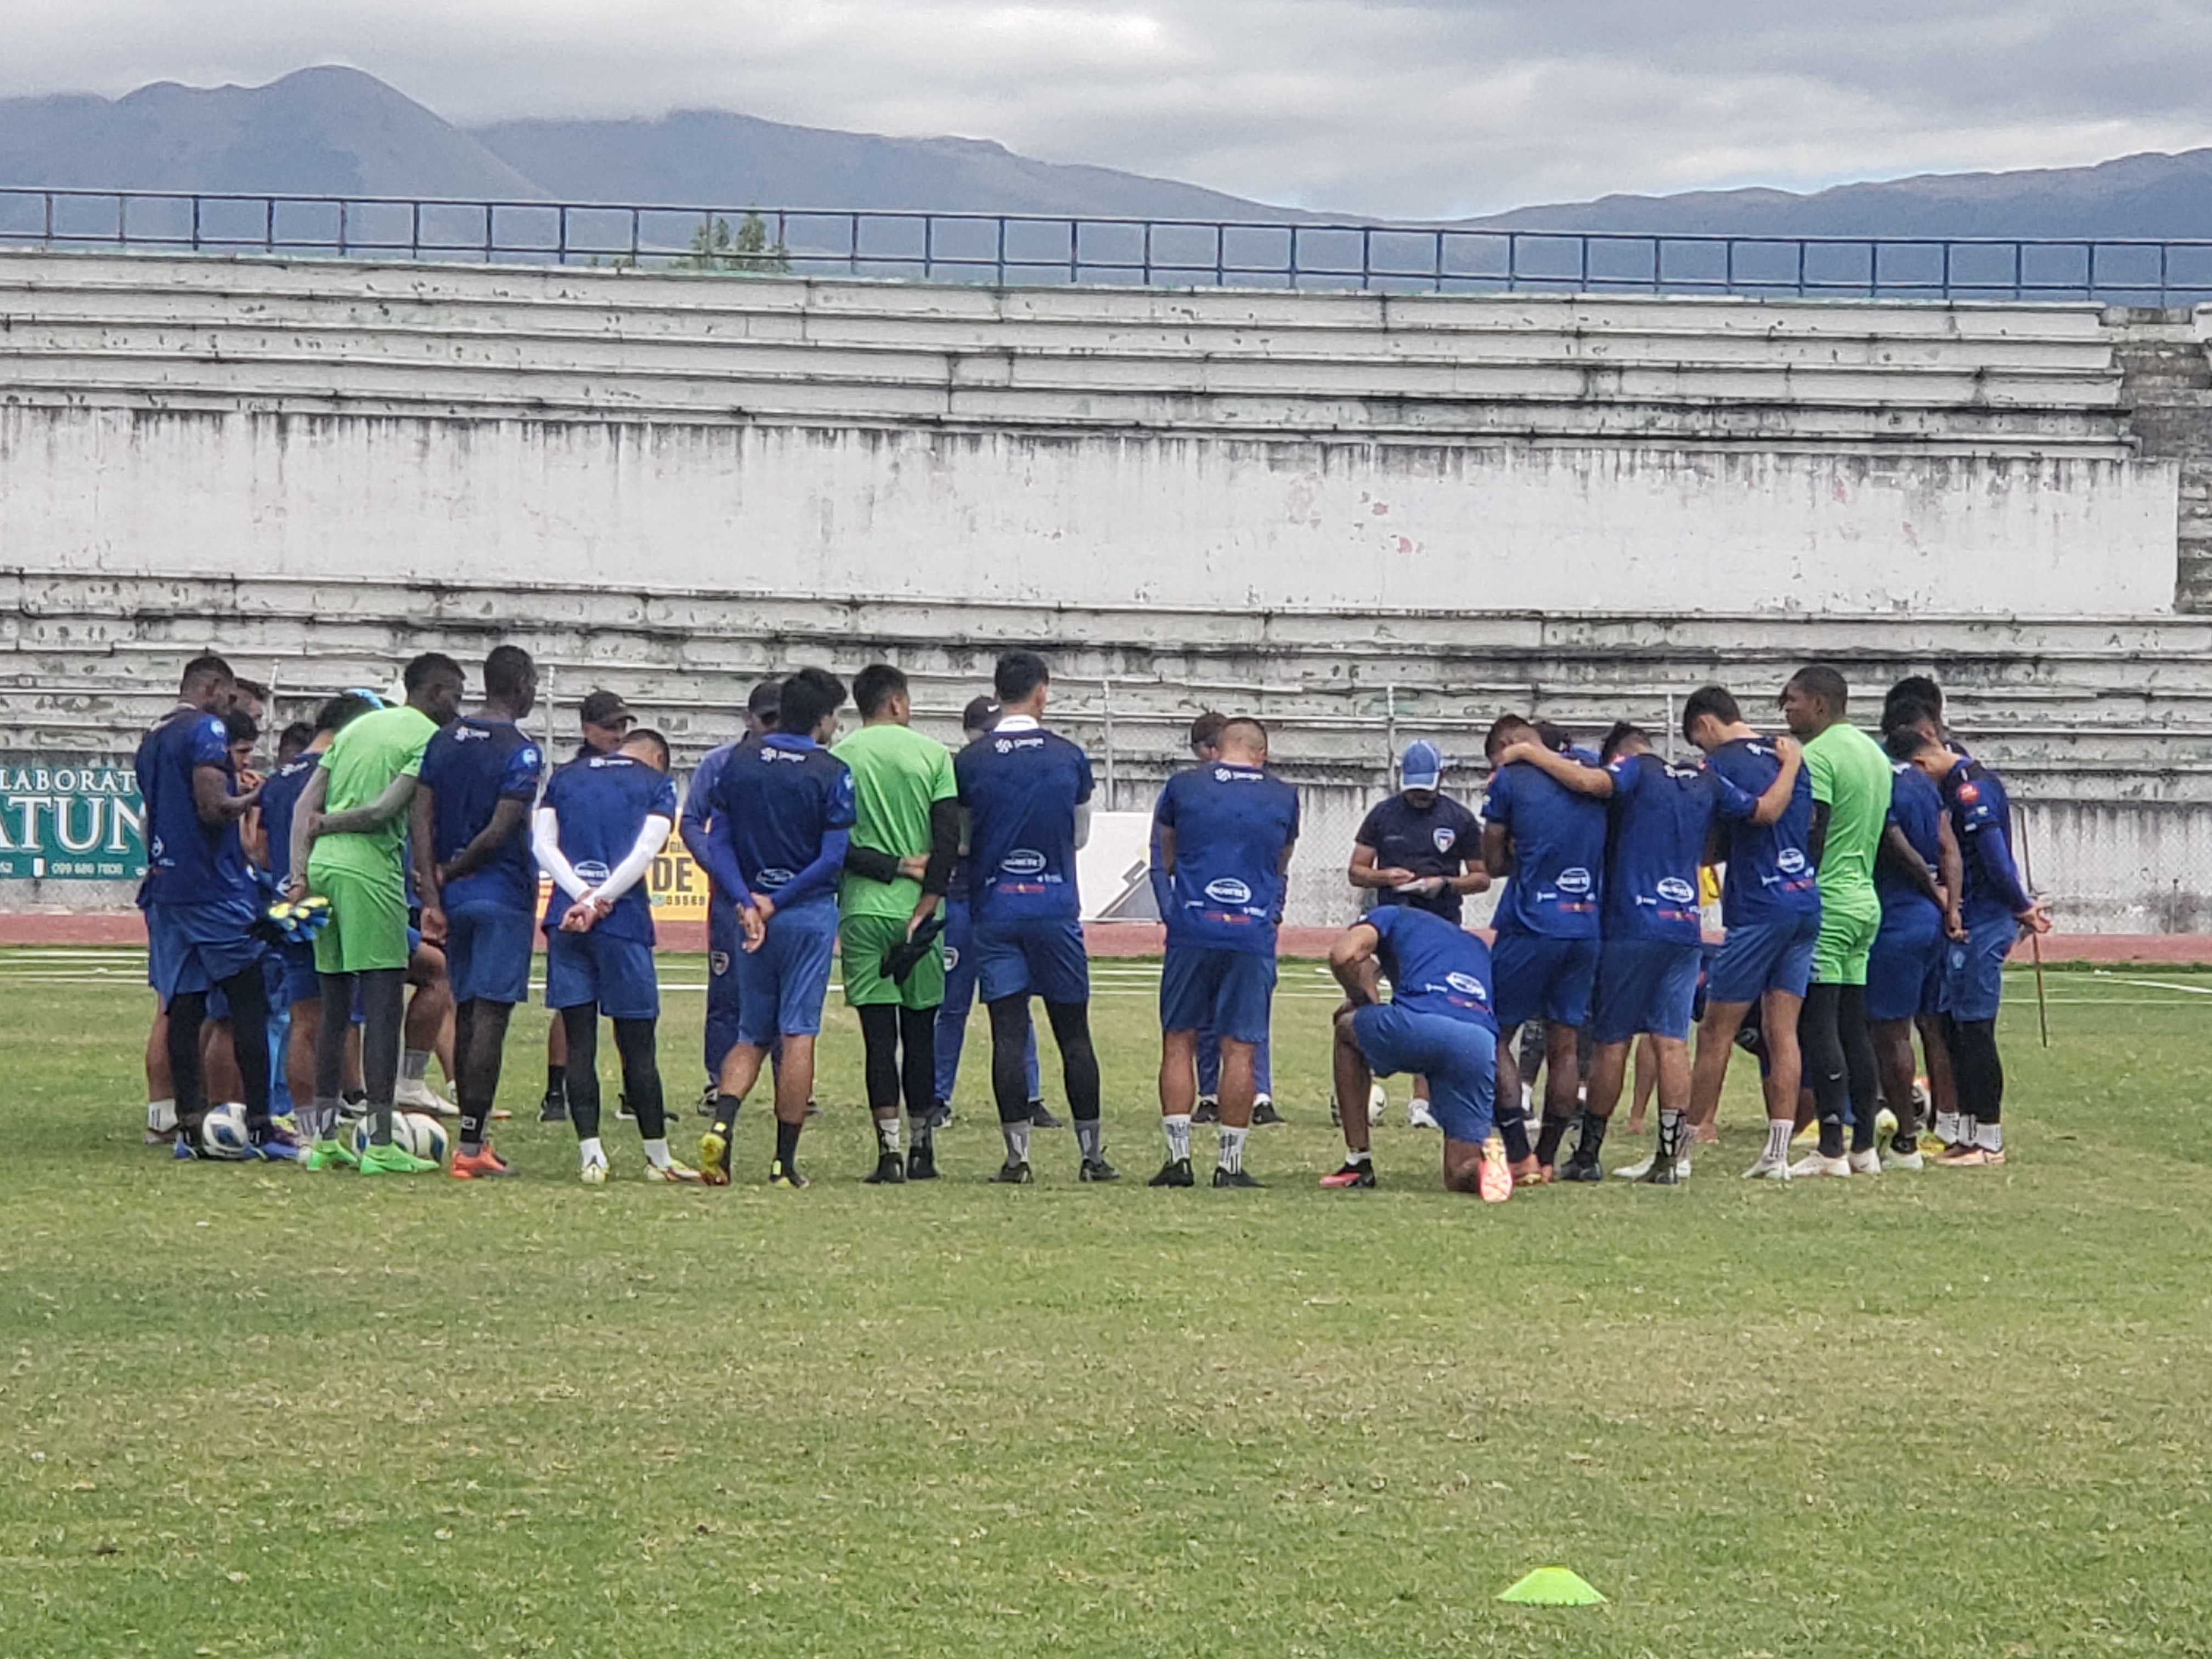 somosdelmismobarro: Imbabureños con rivales en Copa Ecuador 2022